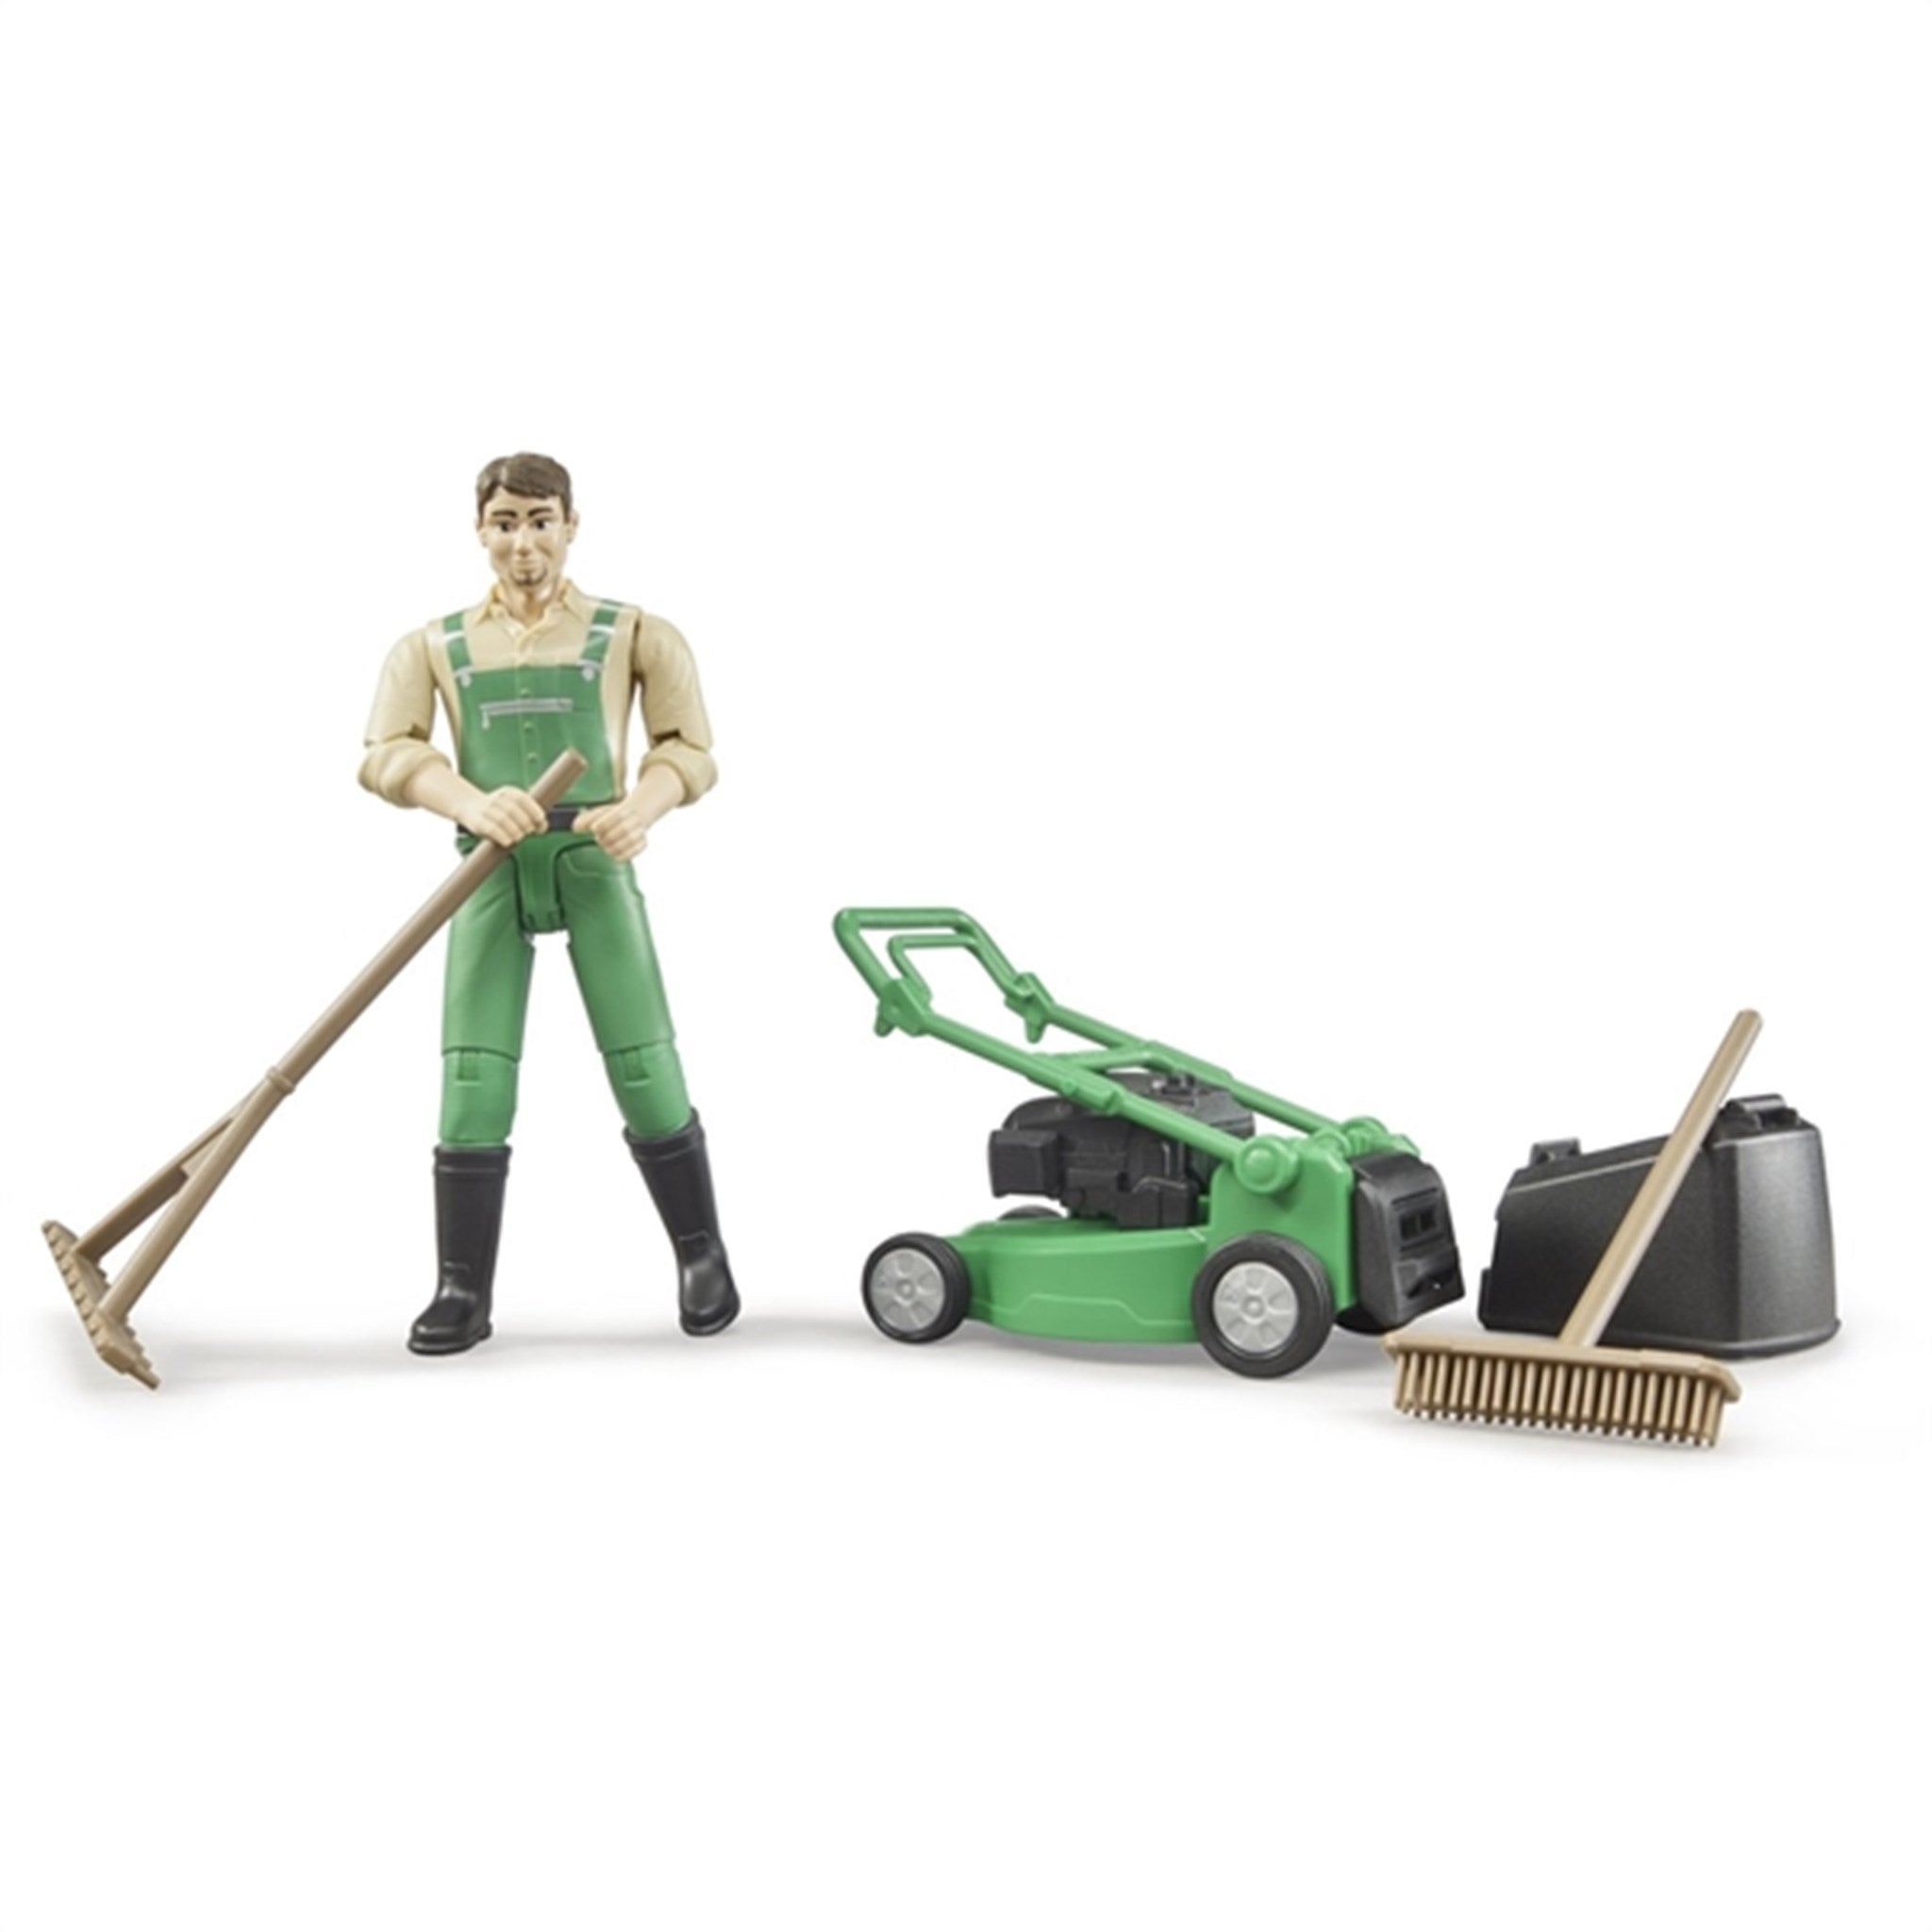 Bruder Bworld Gardener with Lawn Mower and Equipment 3